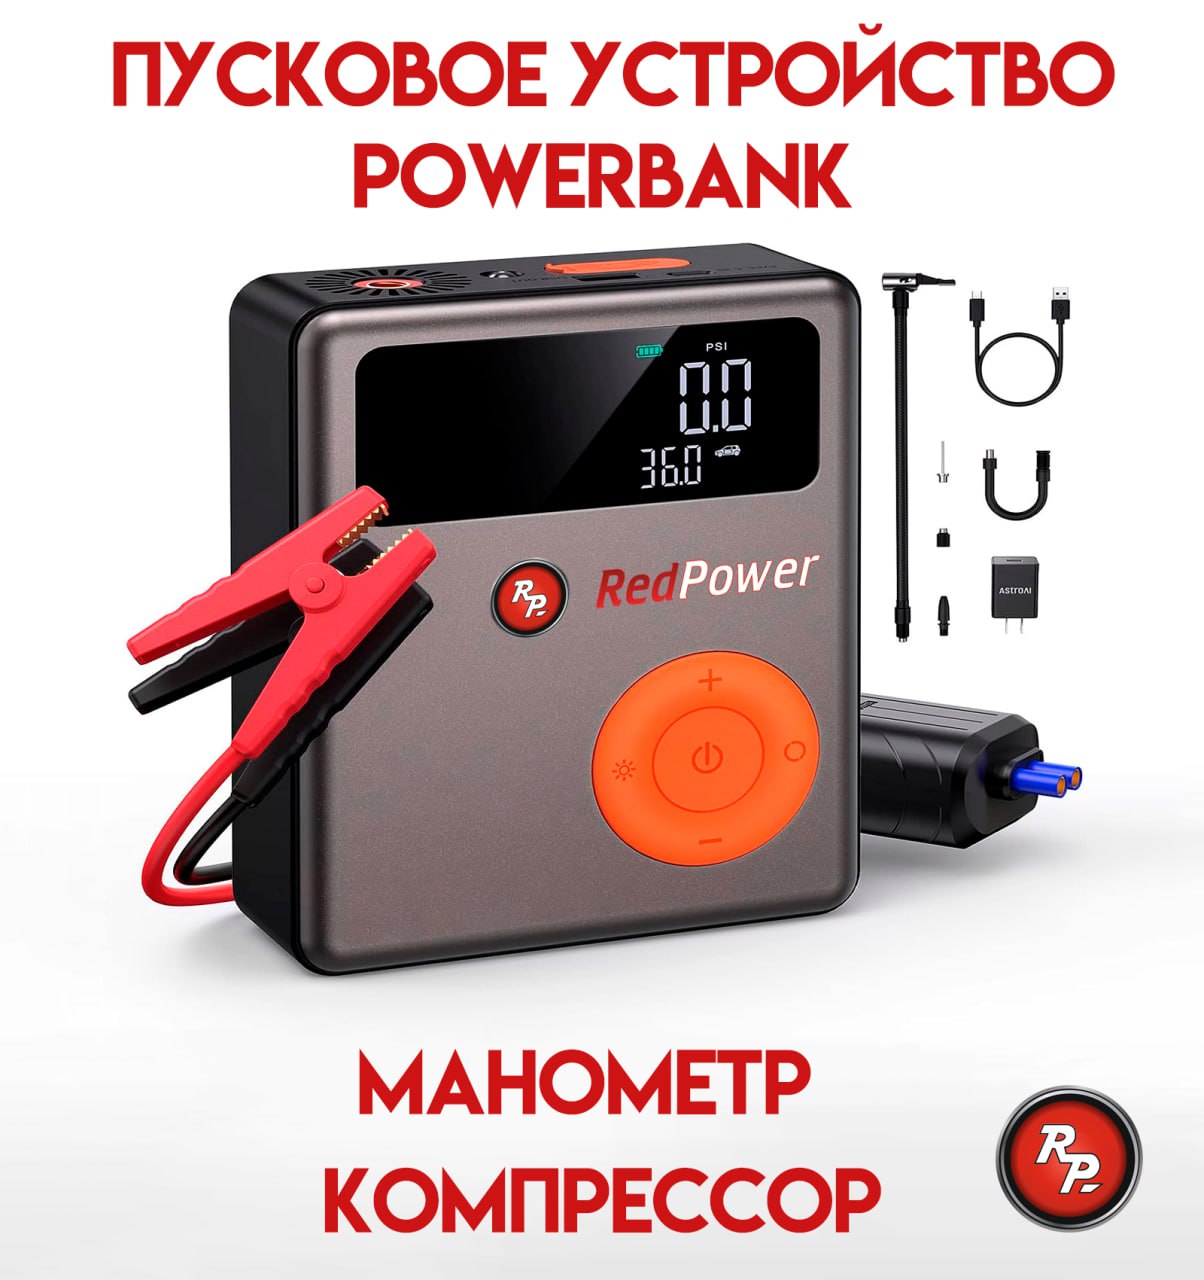 Пусковое устройство Jump Starter 2 в 1 с компрессором RedPower DKMF139